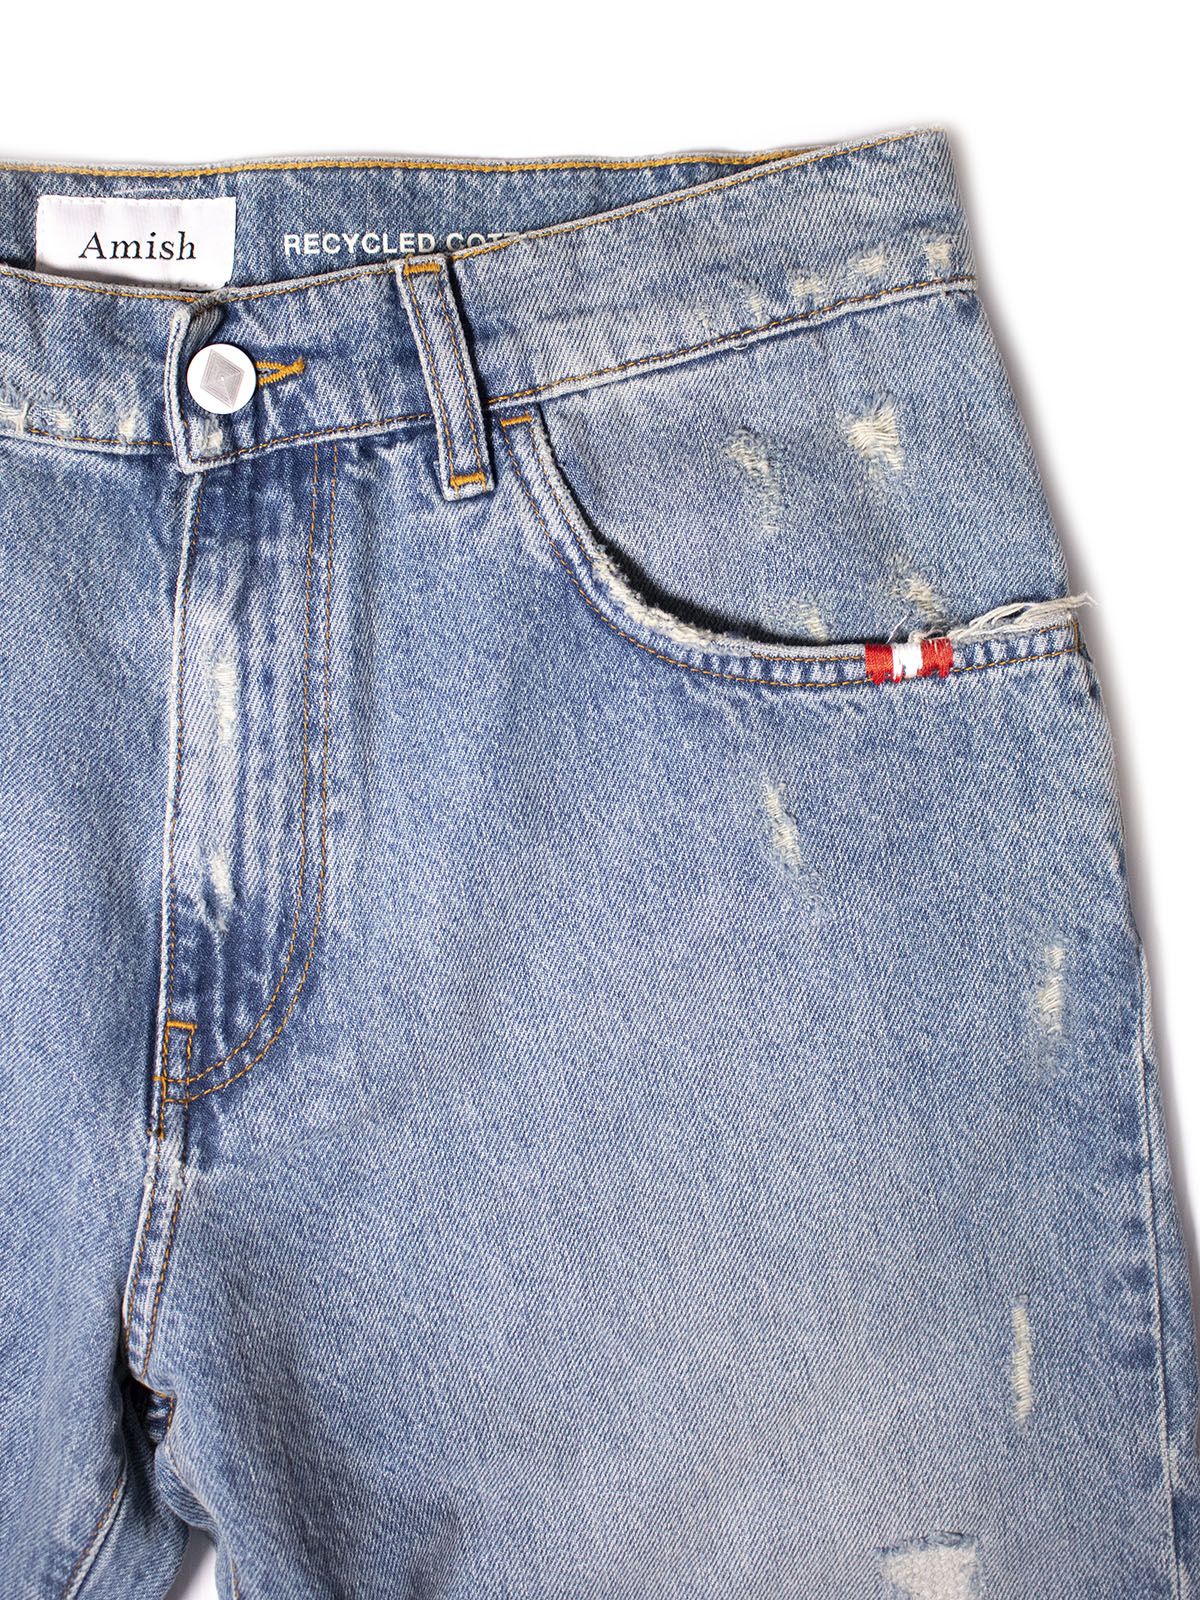 Jeans Uomo Amish - James Side Recycled Denim Dirty Vintage - Celeste